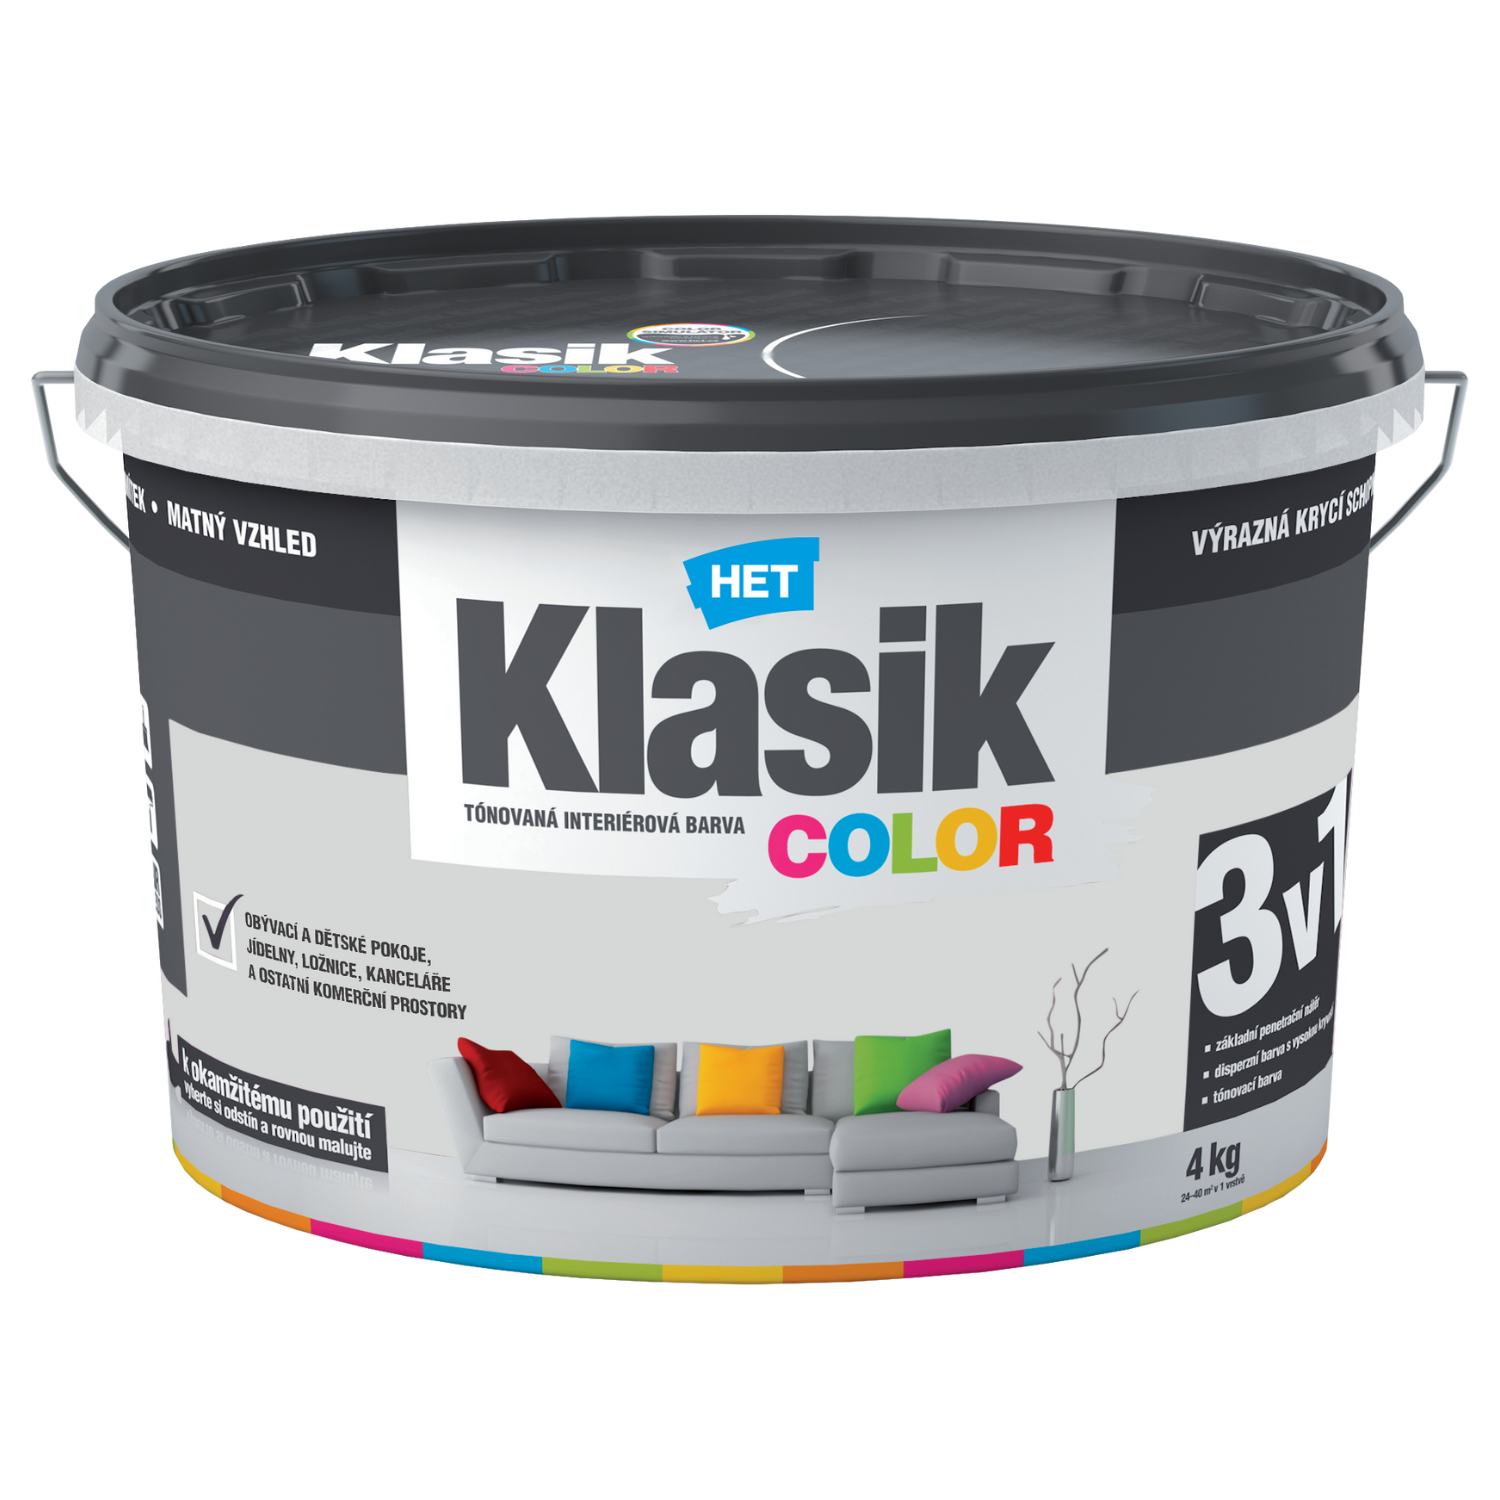 HET Klasik COLOR tónovaná interiérová akrylátová disperzná oteruvzdorná farba 1,5 kg, KC0828 - lososový